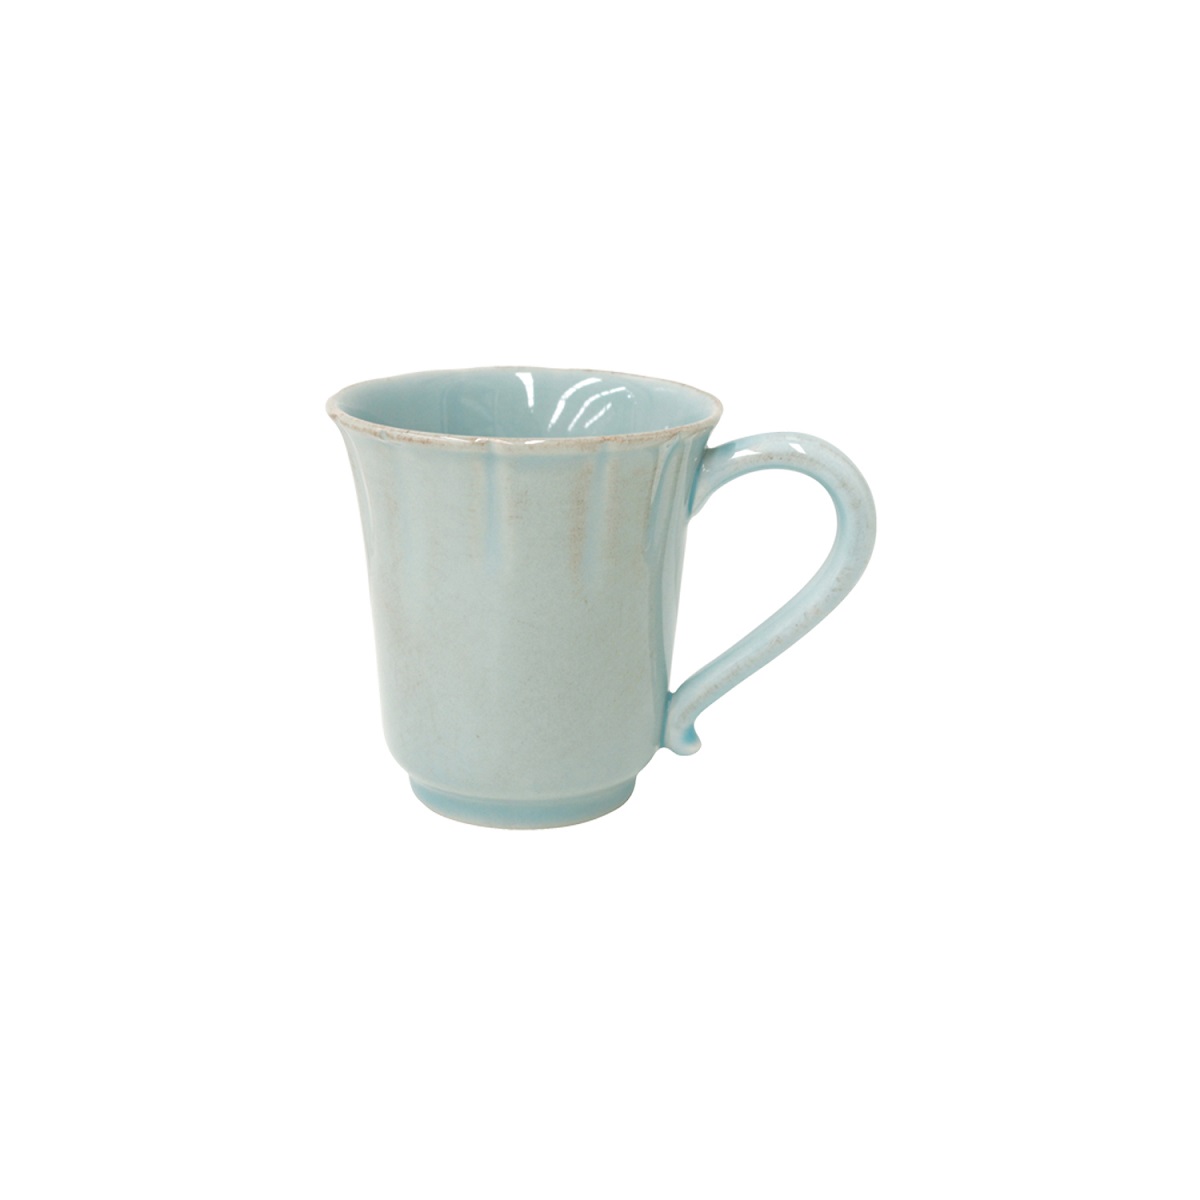 Alentejo Turquoise Mug Gift